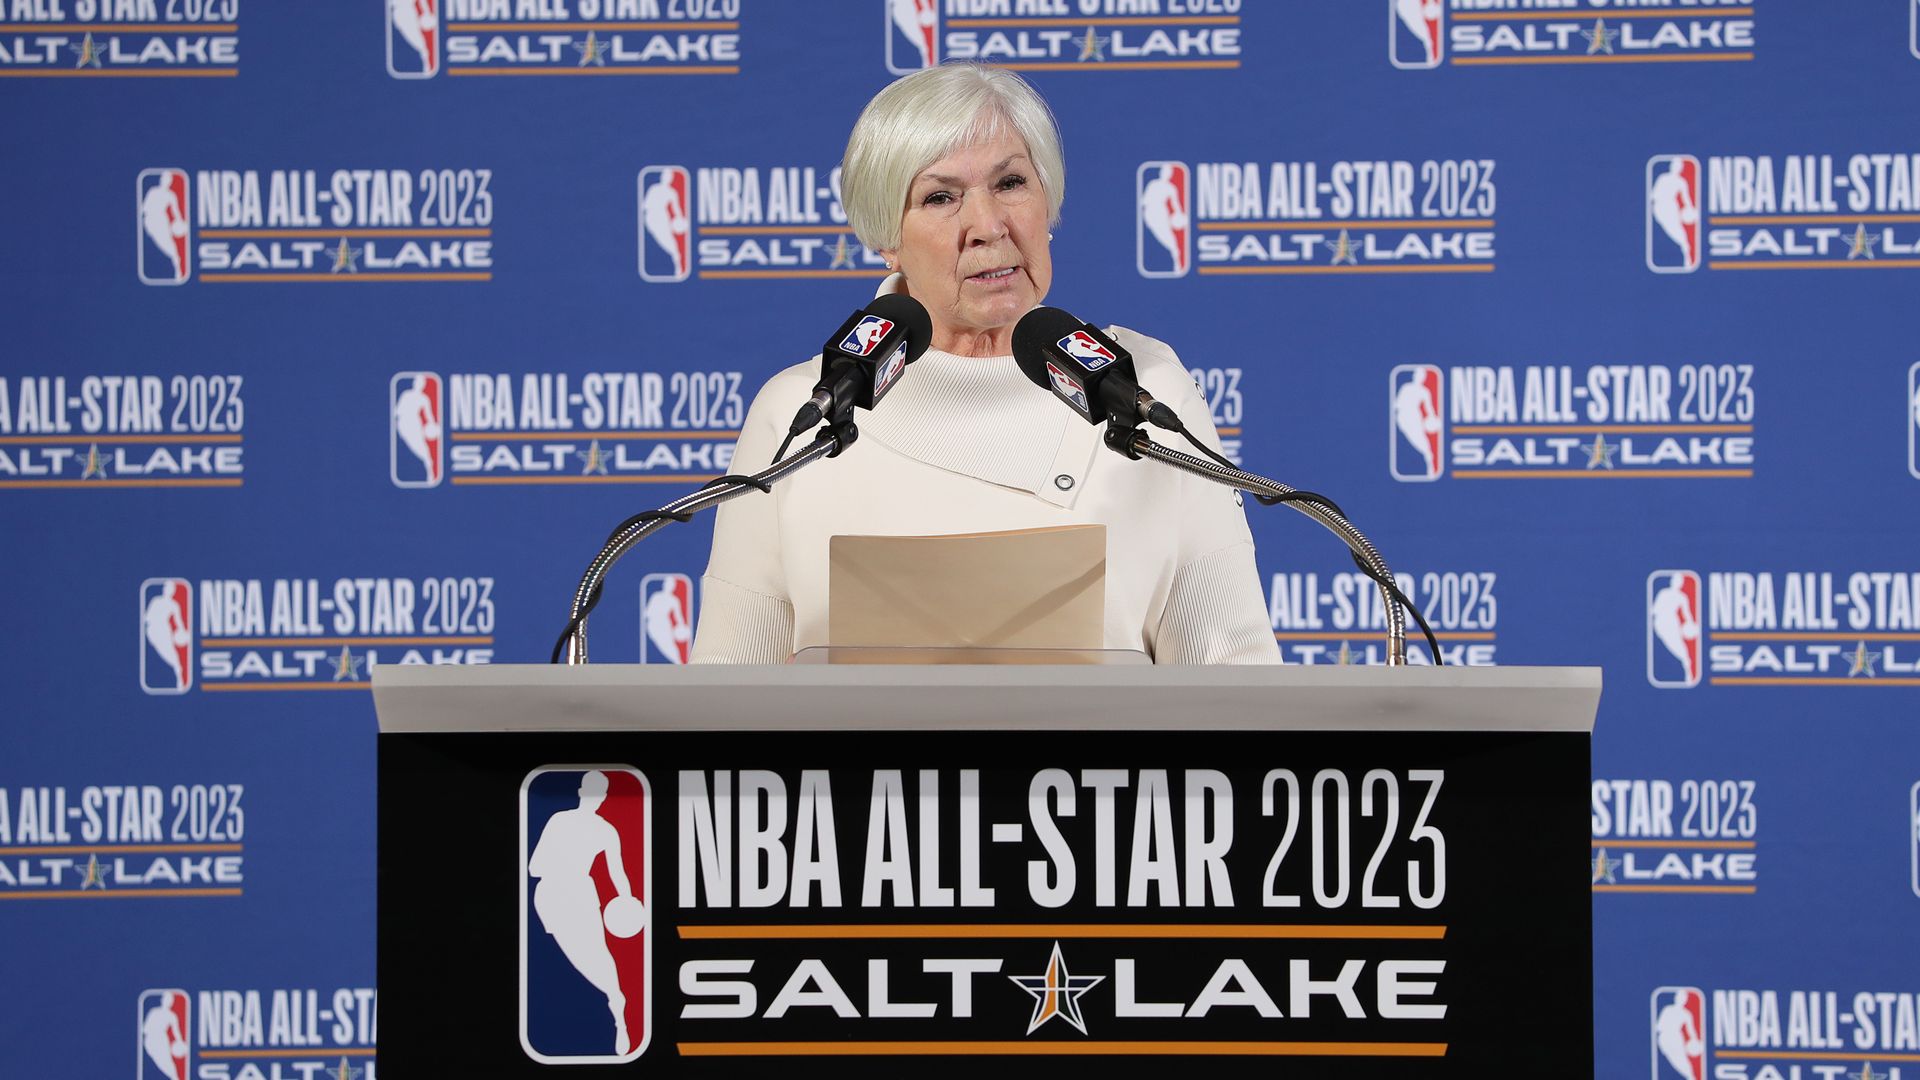 Gail Miller speaks at a podium labeled "NBA All-Star 2023 Salt Lake"